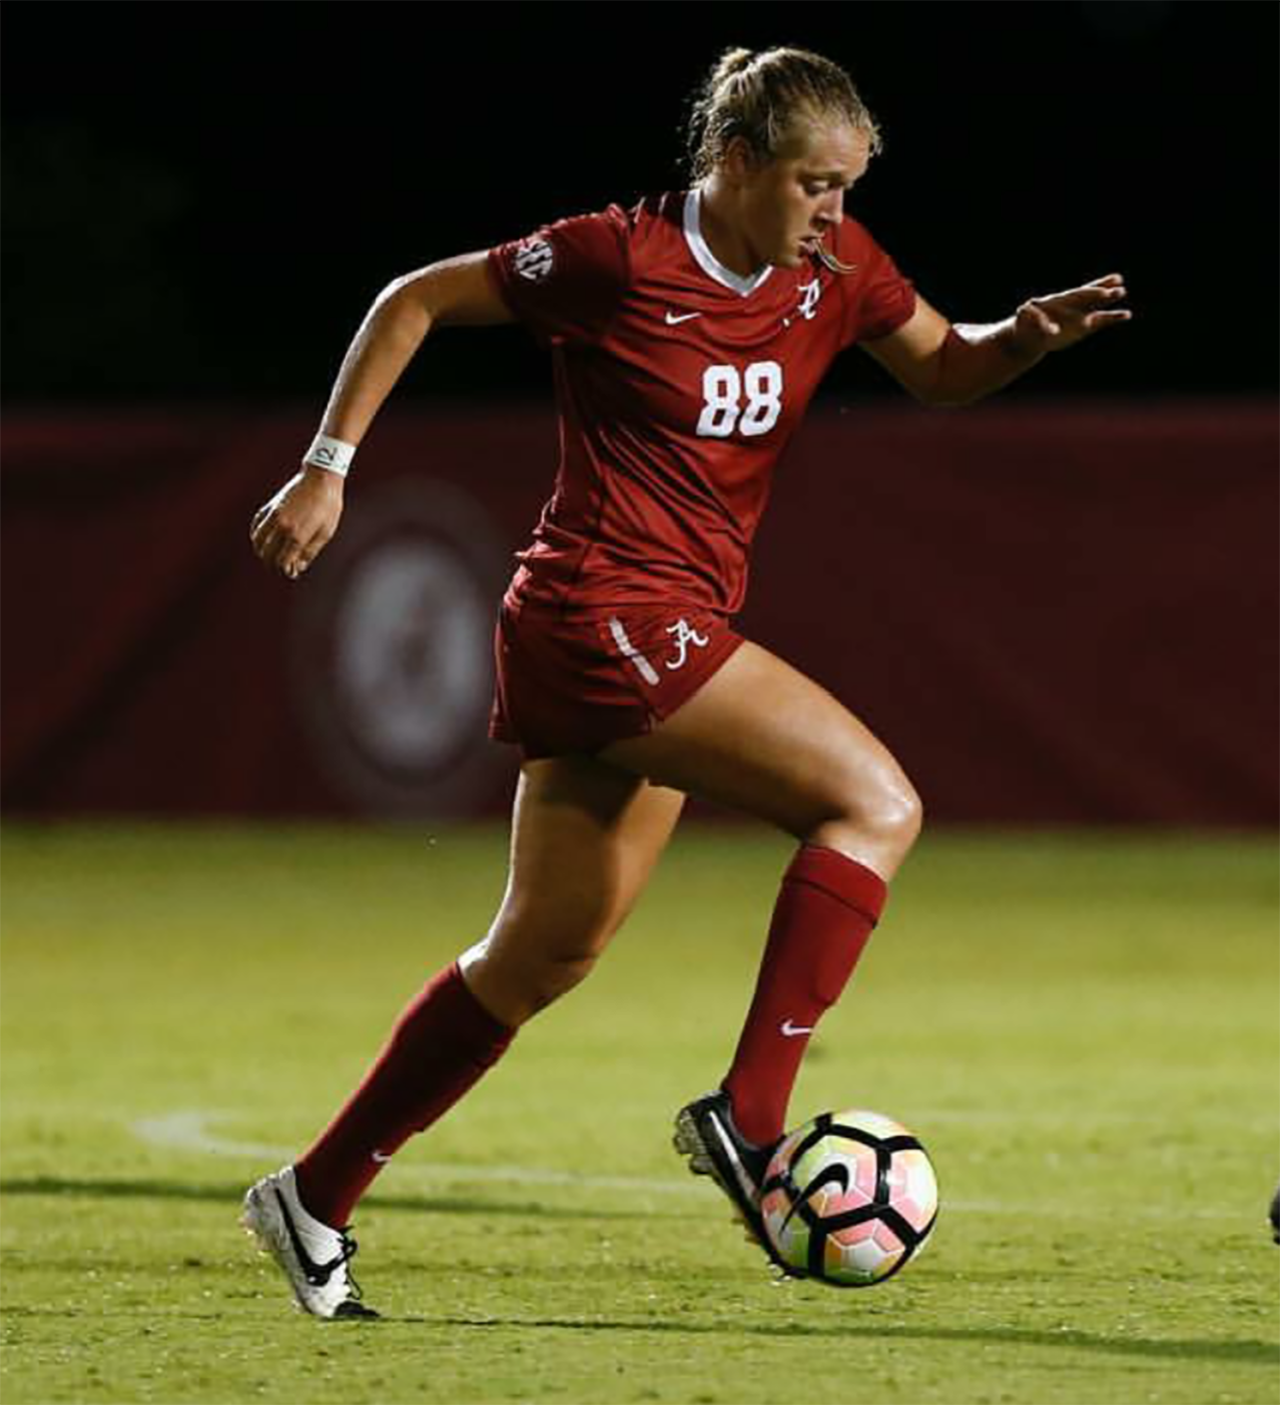 Lacey wearing her University of Alabama uniform, kicking a soccer ball.